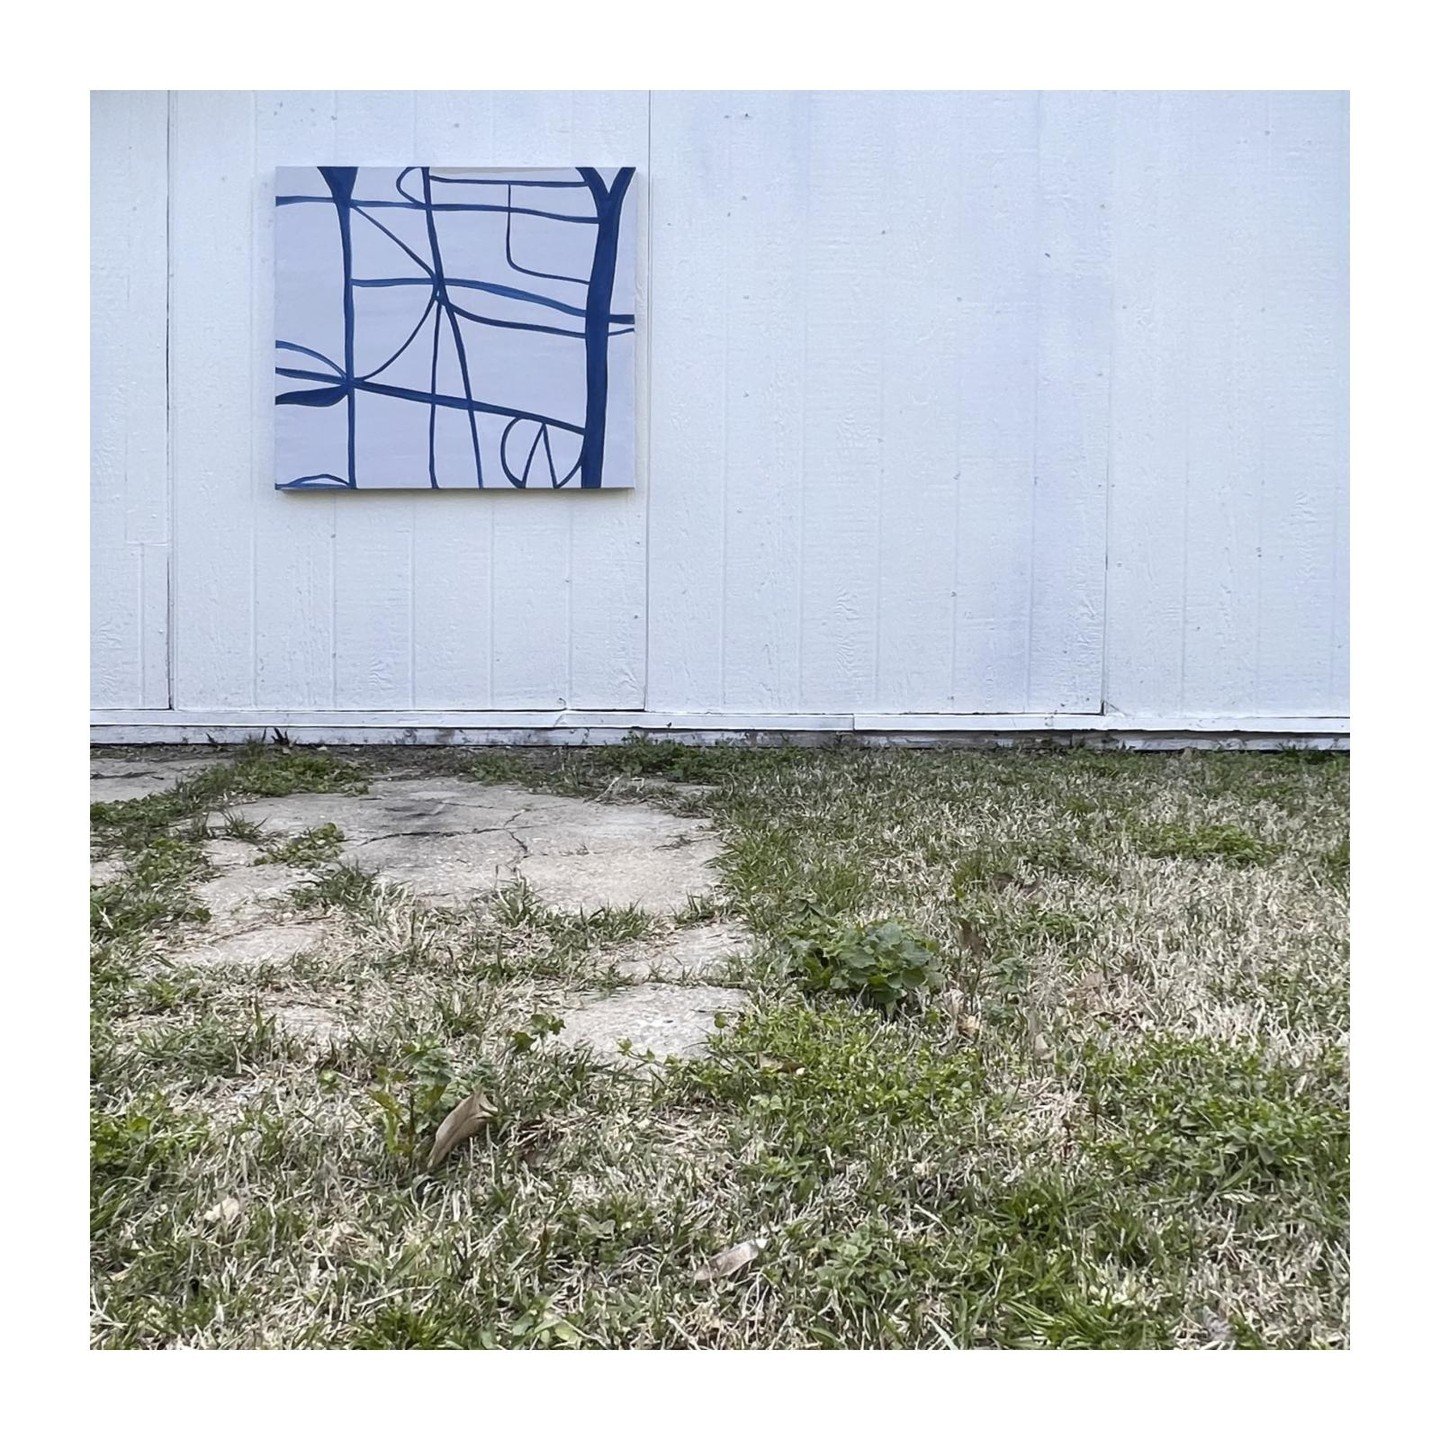 Etnografica Indigo No. 00AA UNFRAMED⁣
By Kim Fonder ⁣
36 x 36 in ⁣
#hygge #japandi #wabisabi #kimfonder #artcollector #artcurator #sodomino #abstractpainting #artcollectors #curator #artdealer #artcollection #contemporaryartcurator  #quietluxury